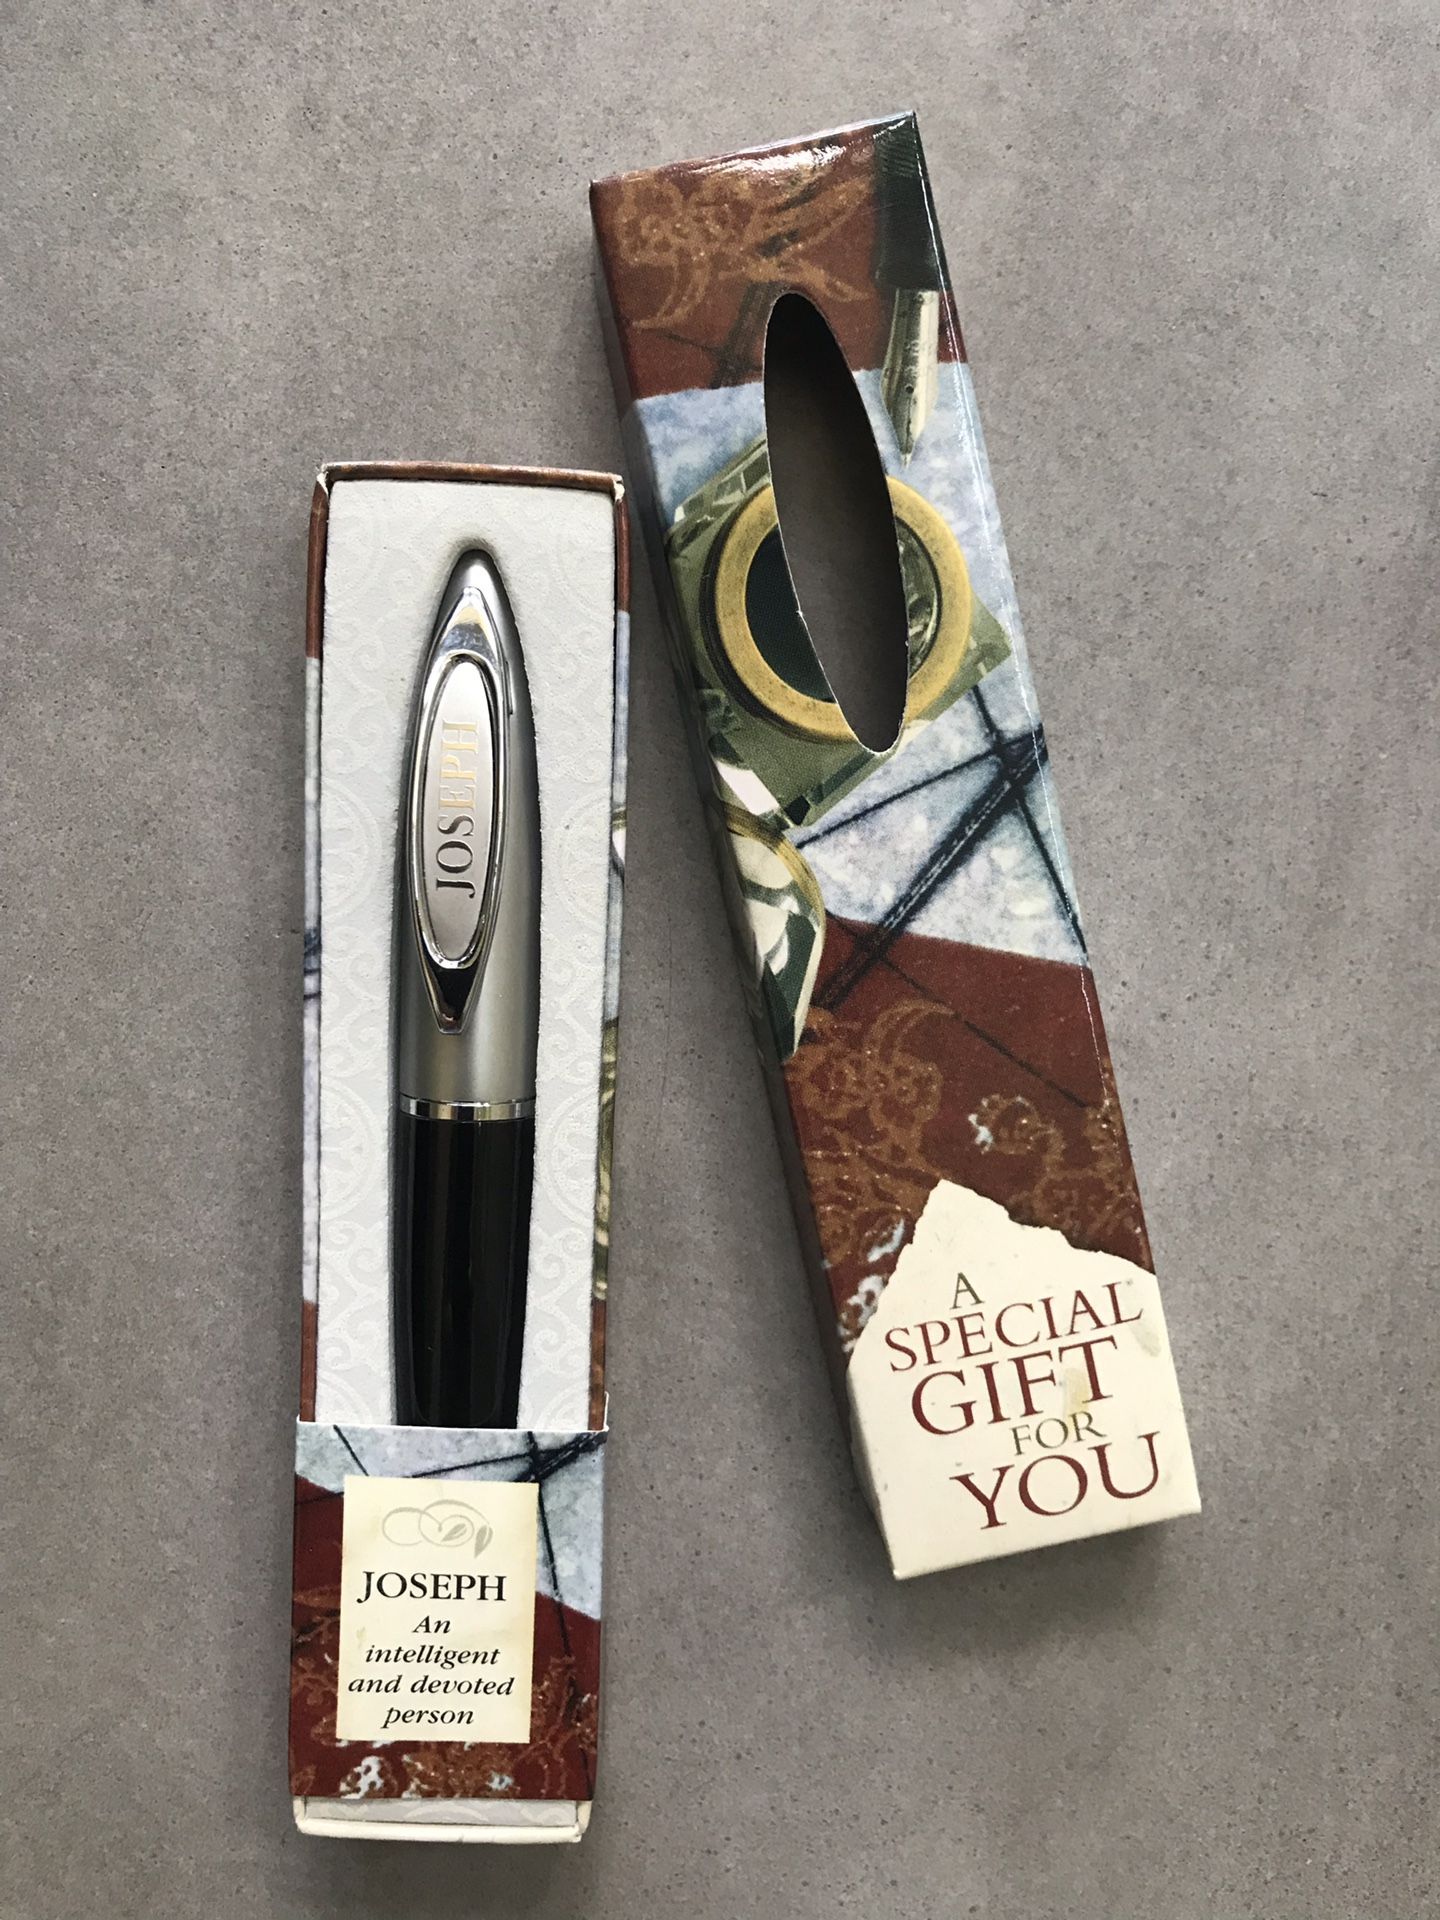 Joseph ballpoint pen in gift box